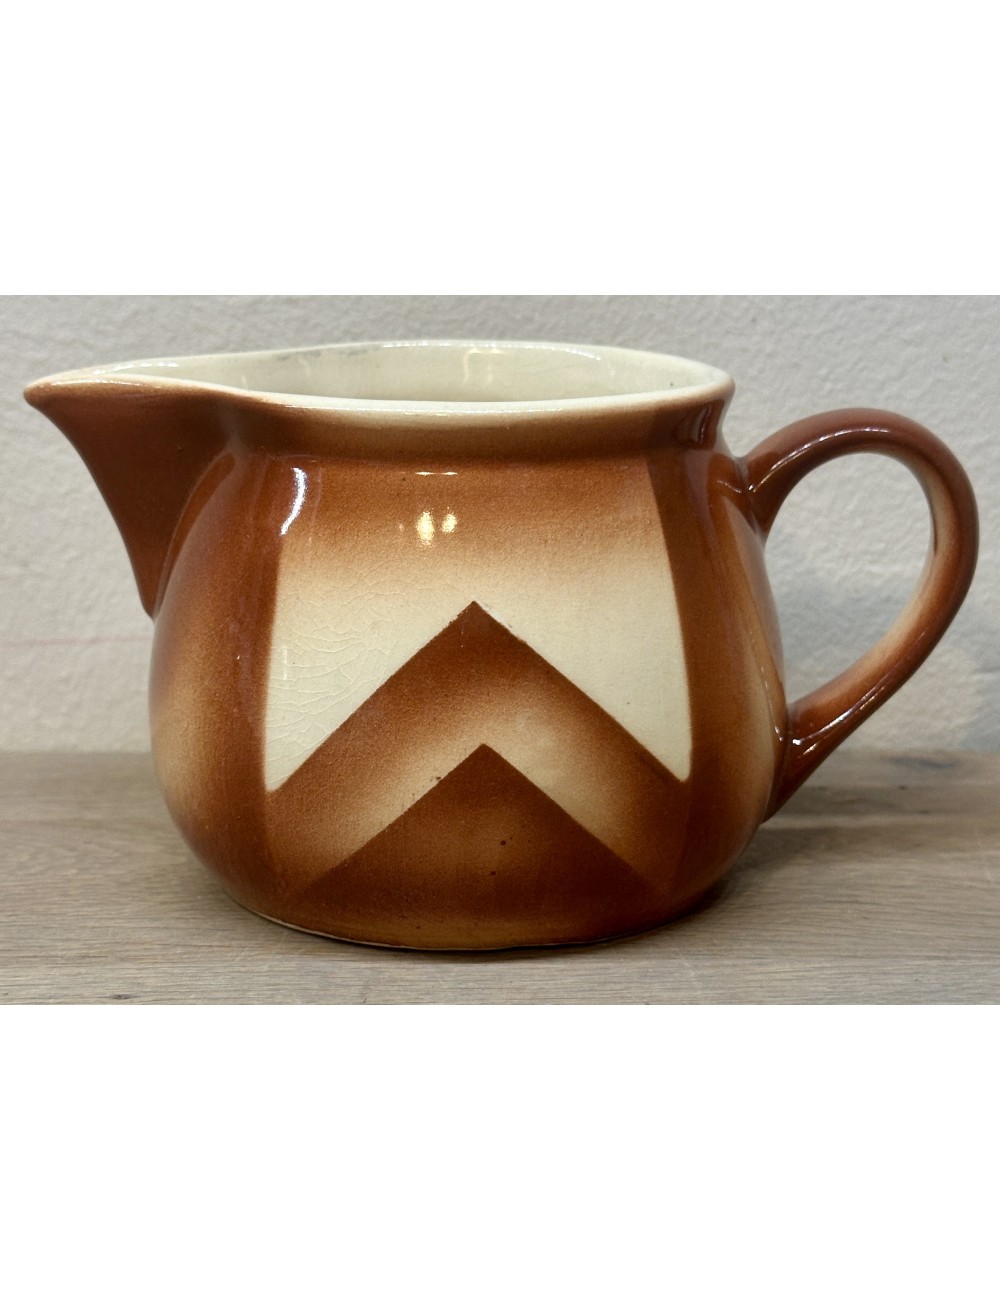 Milk jug / Cream jug - refractory -Bunzlan Germany - spritzmuster décor in different shades of brown